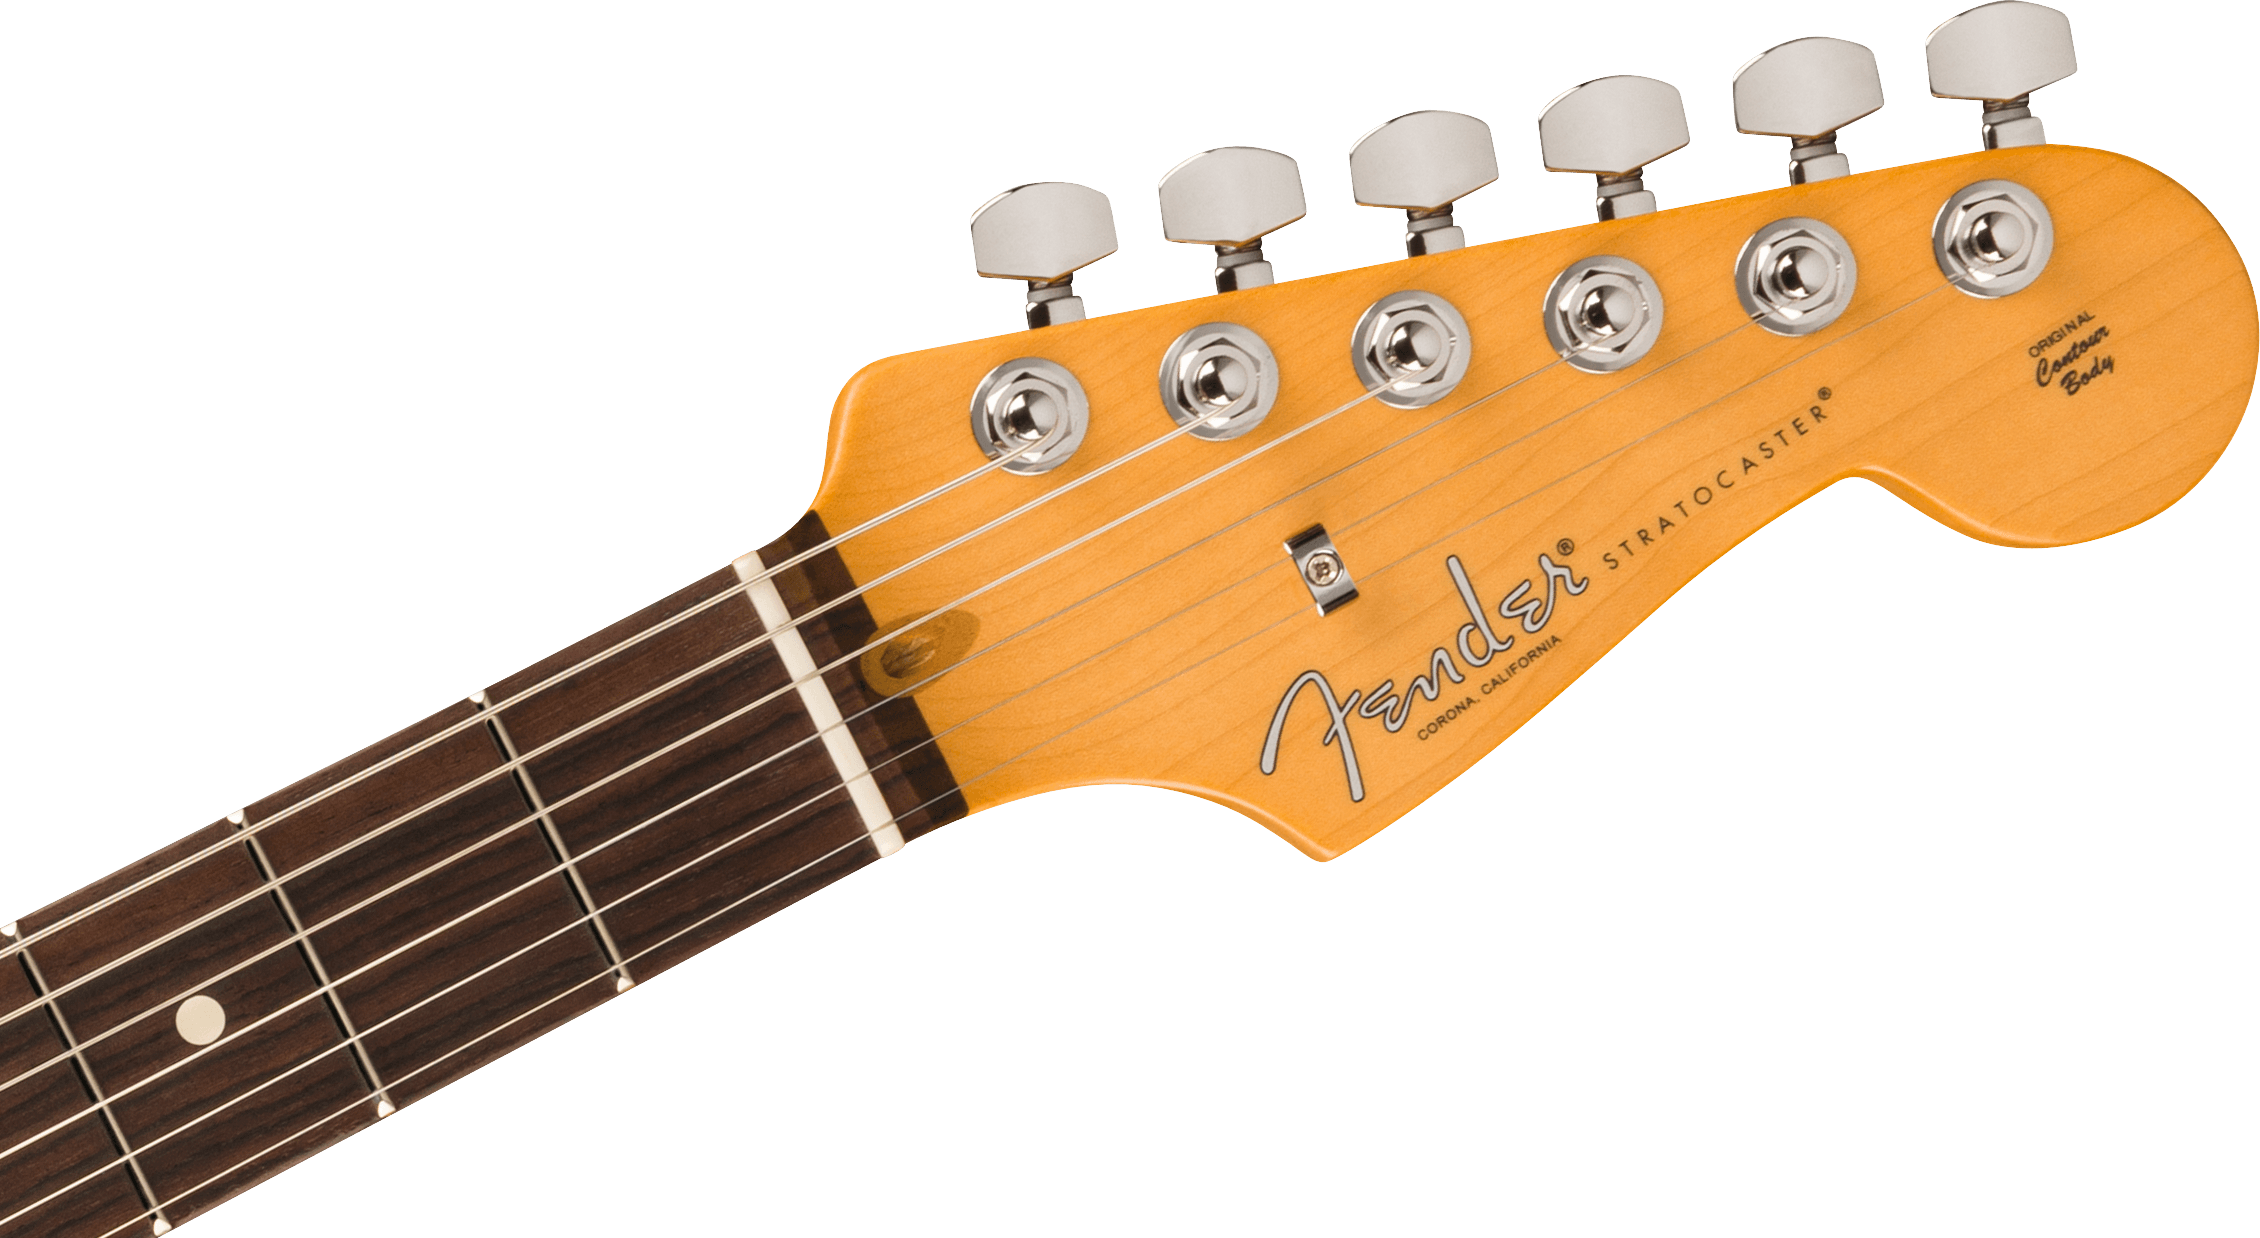 Fender 70th Anniversary American Professional II Stratocaster®, Rosewood Fingerboard, Comet Burst